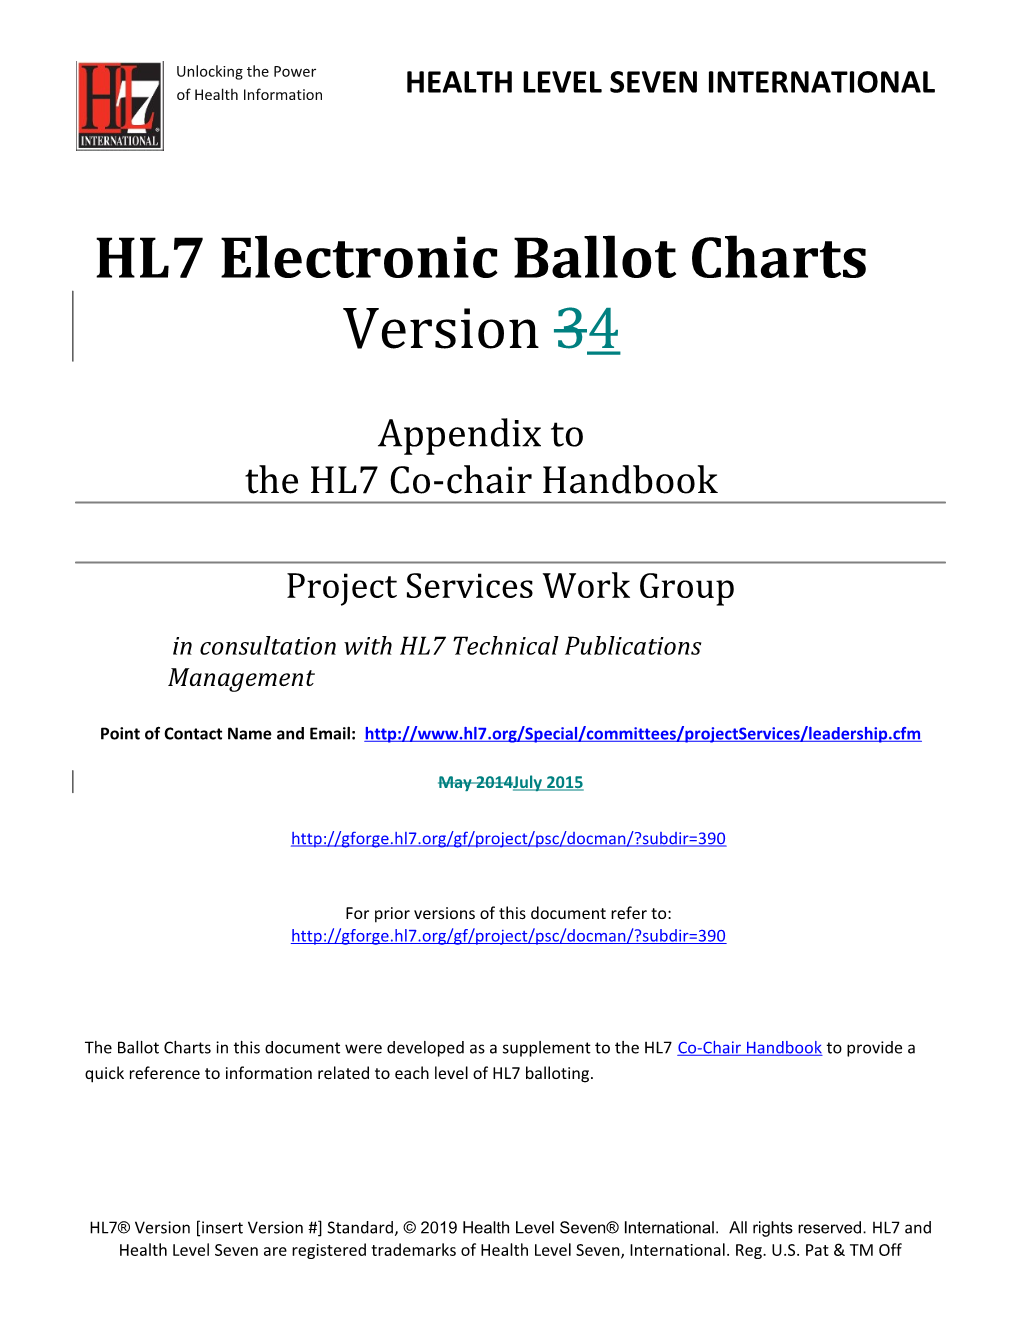 HL7 Electronic Ballot Charts